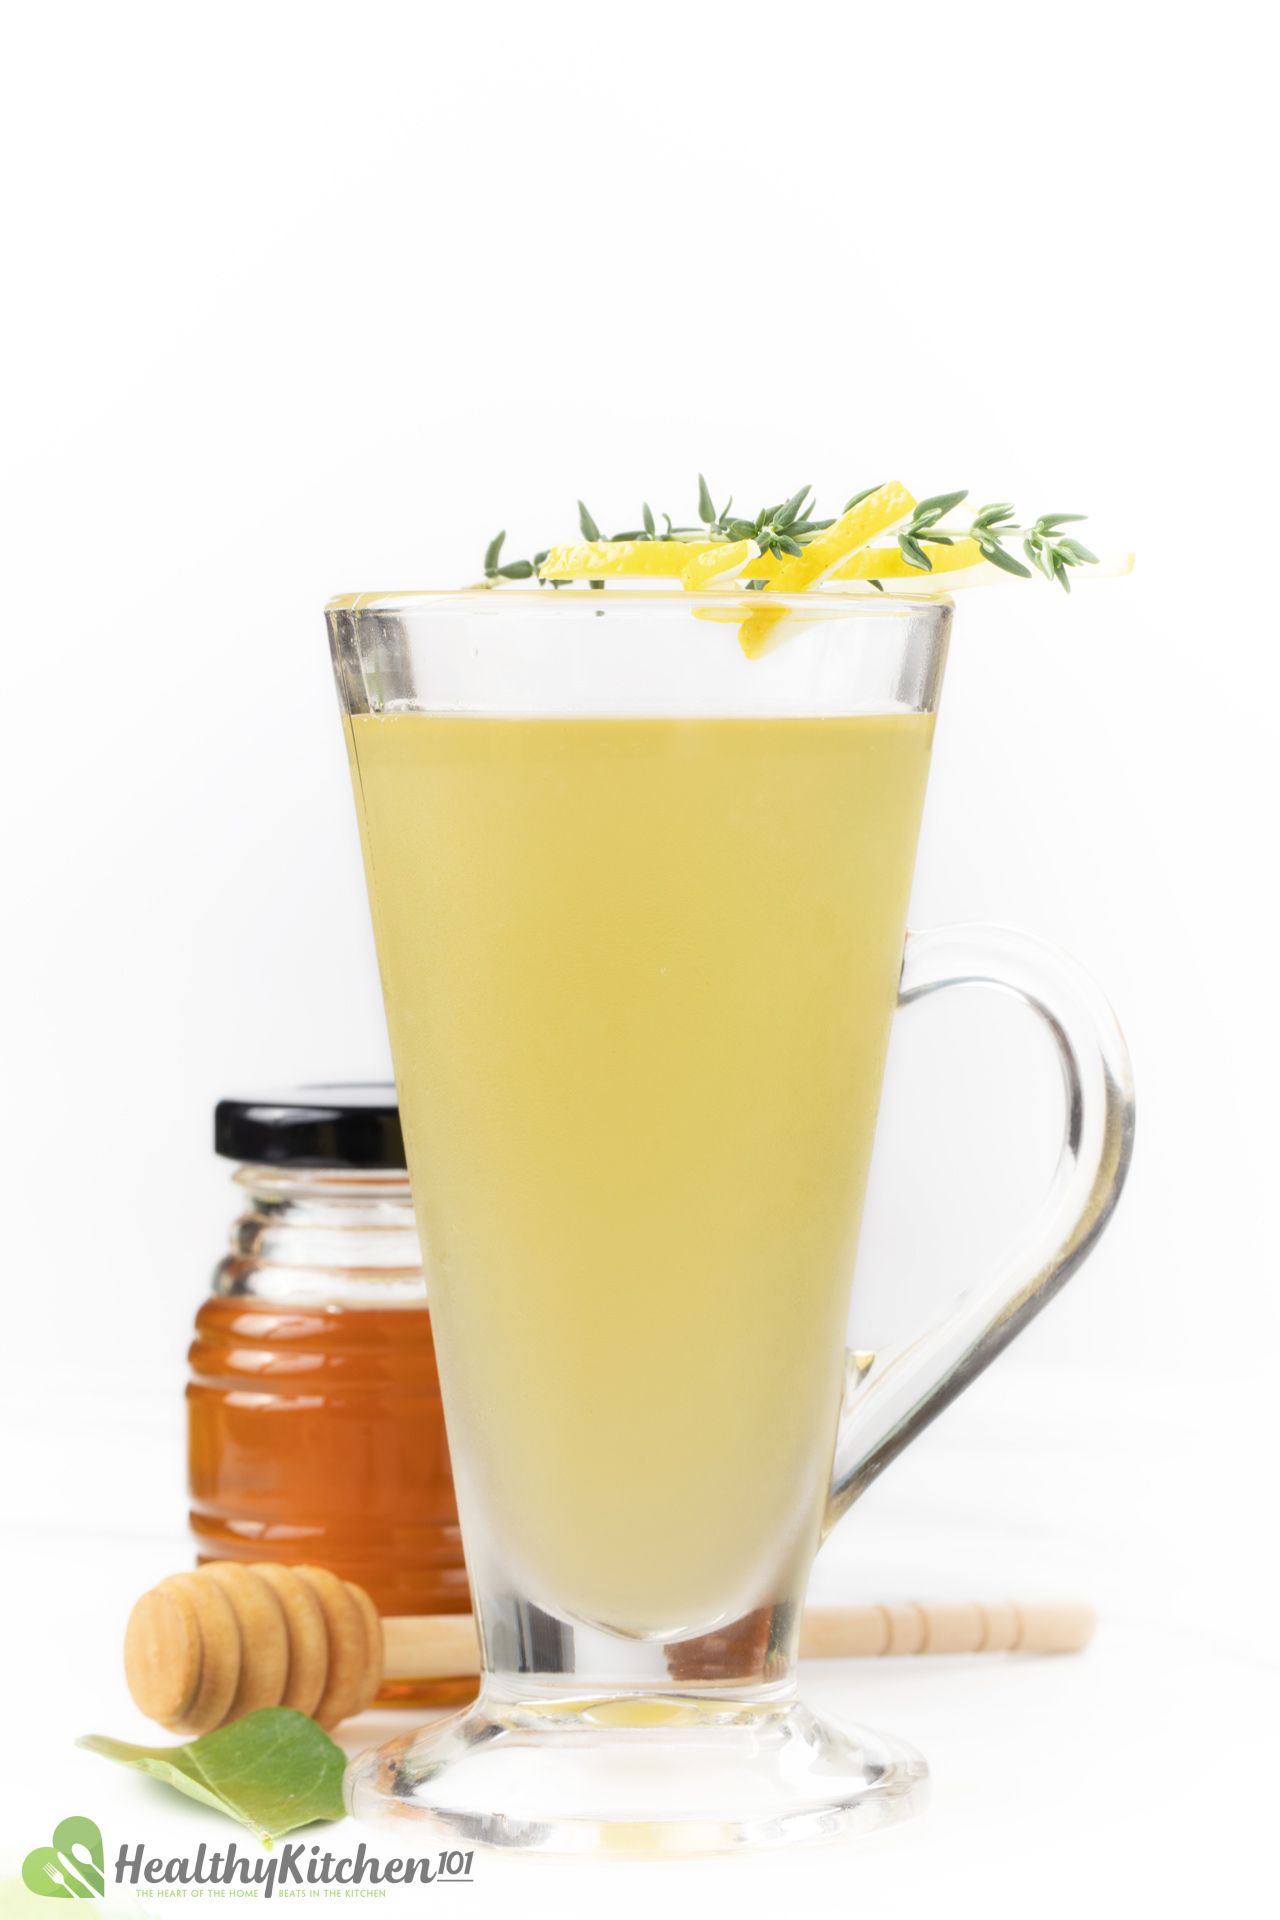 Honey and Lemon Juice